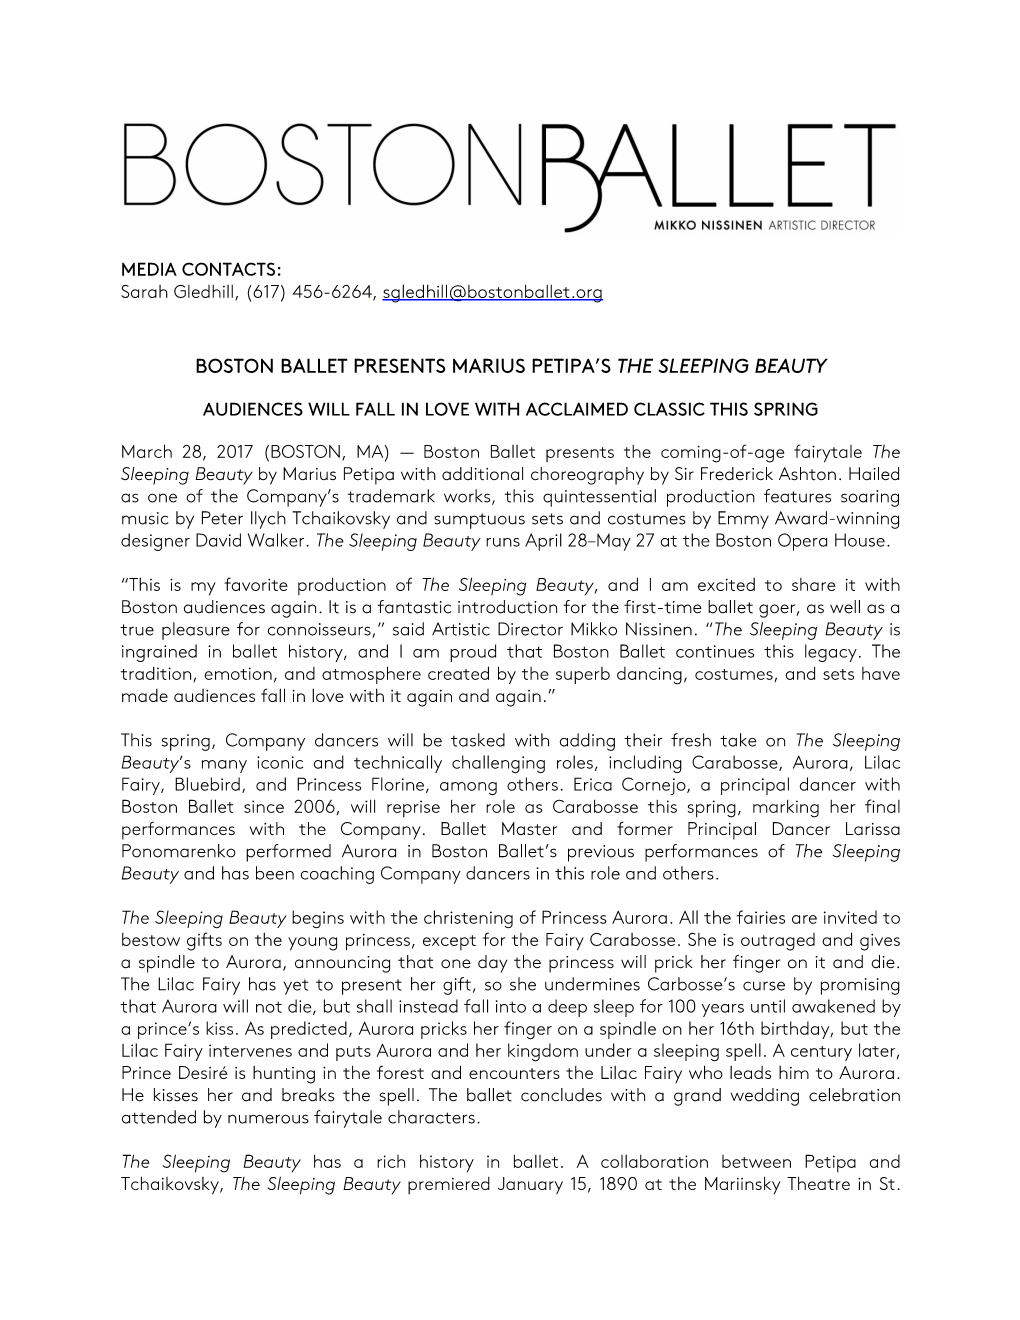 Boston Ballet Presents Marius Petipa's the Sleeping Beauty